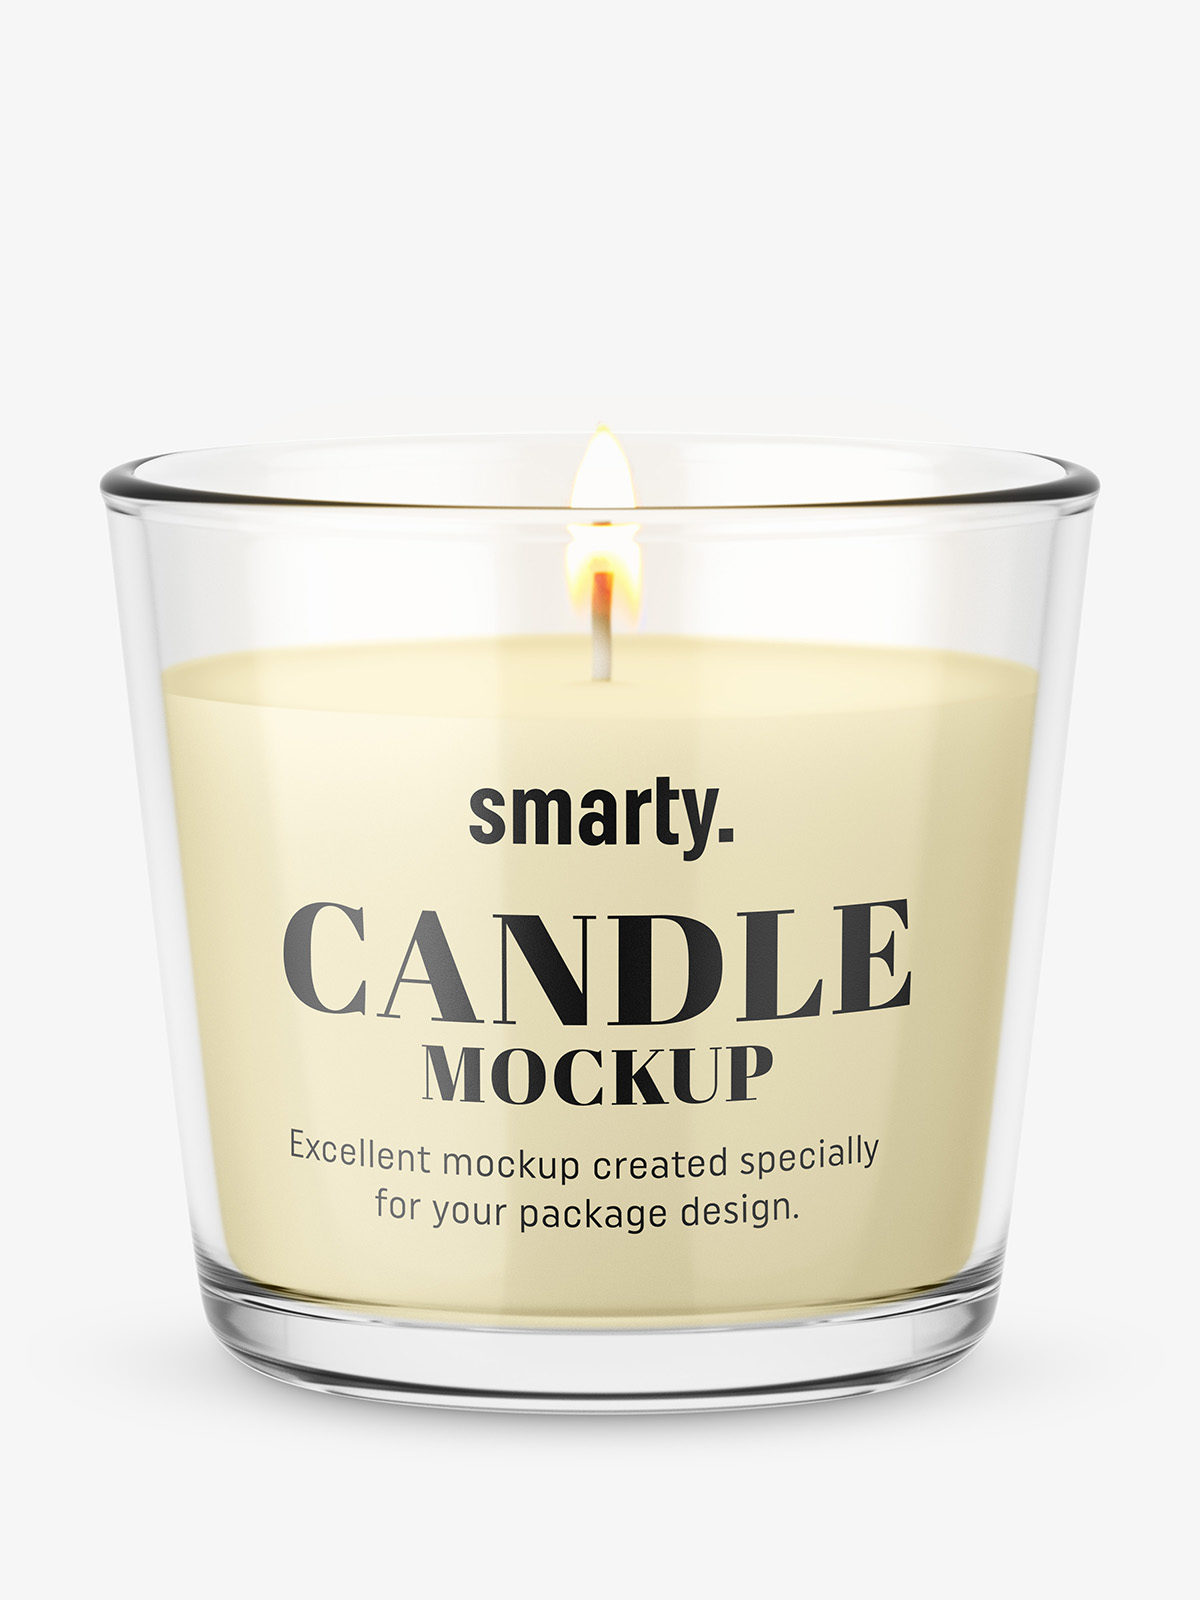 Mockup candle free information